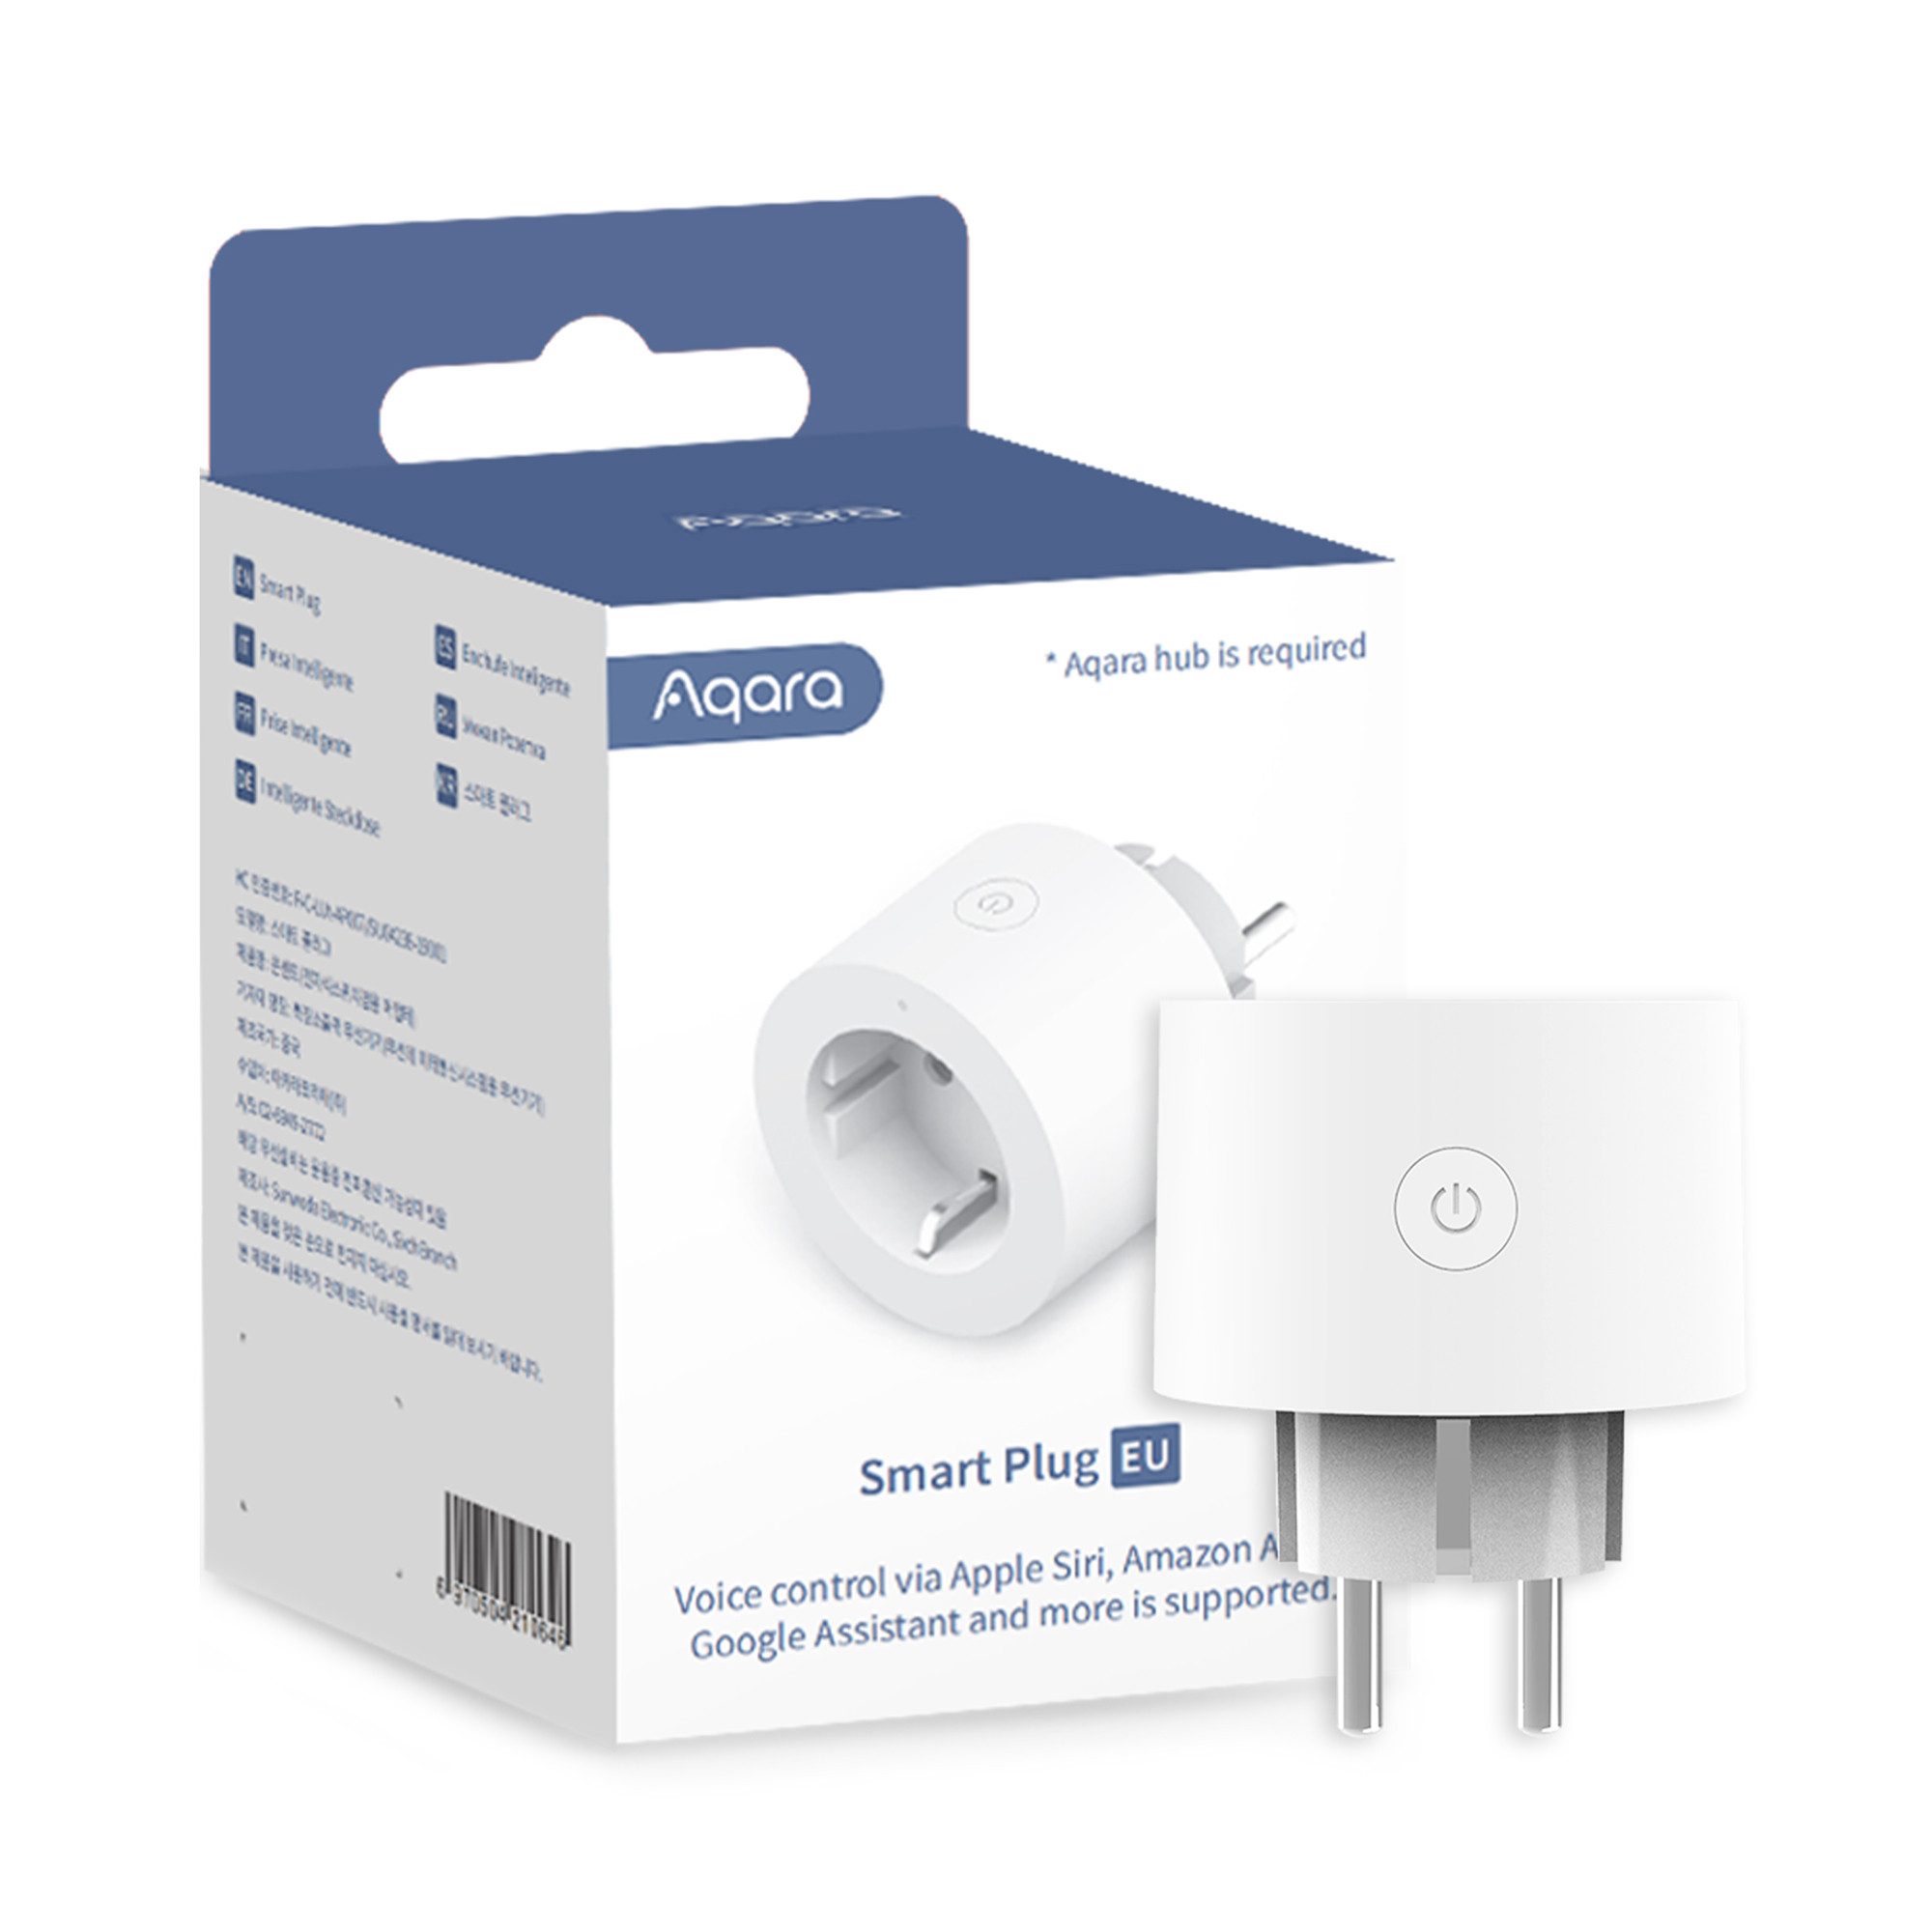 Aqara Steckdose Smart Plug (EU), Erfordert Aqara Hub, Zeitgesteuertes Schalten, Elektrizitätsstatistik